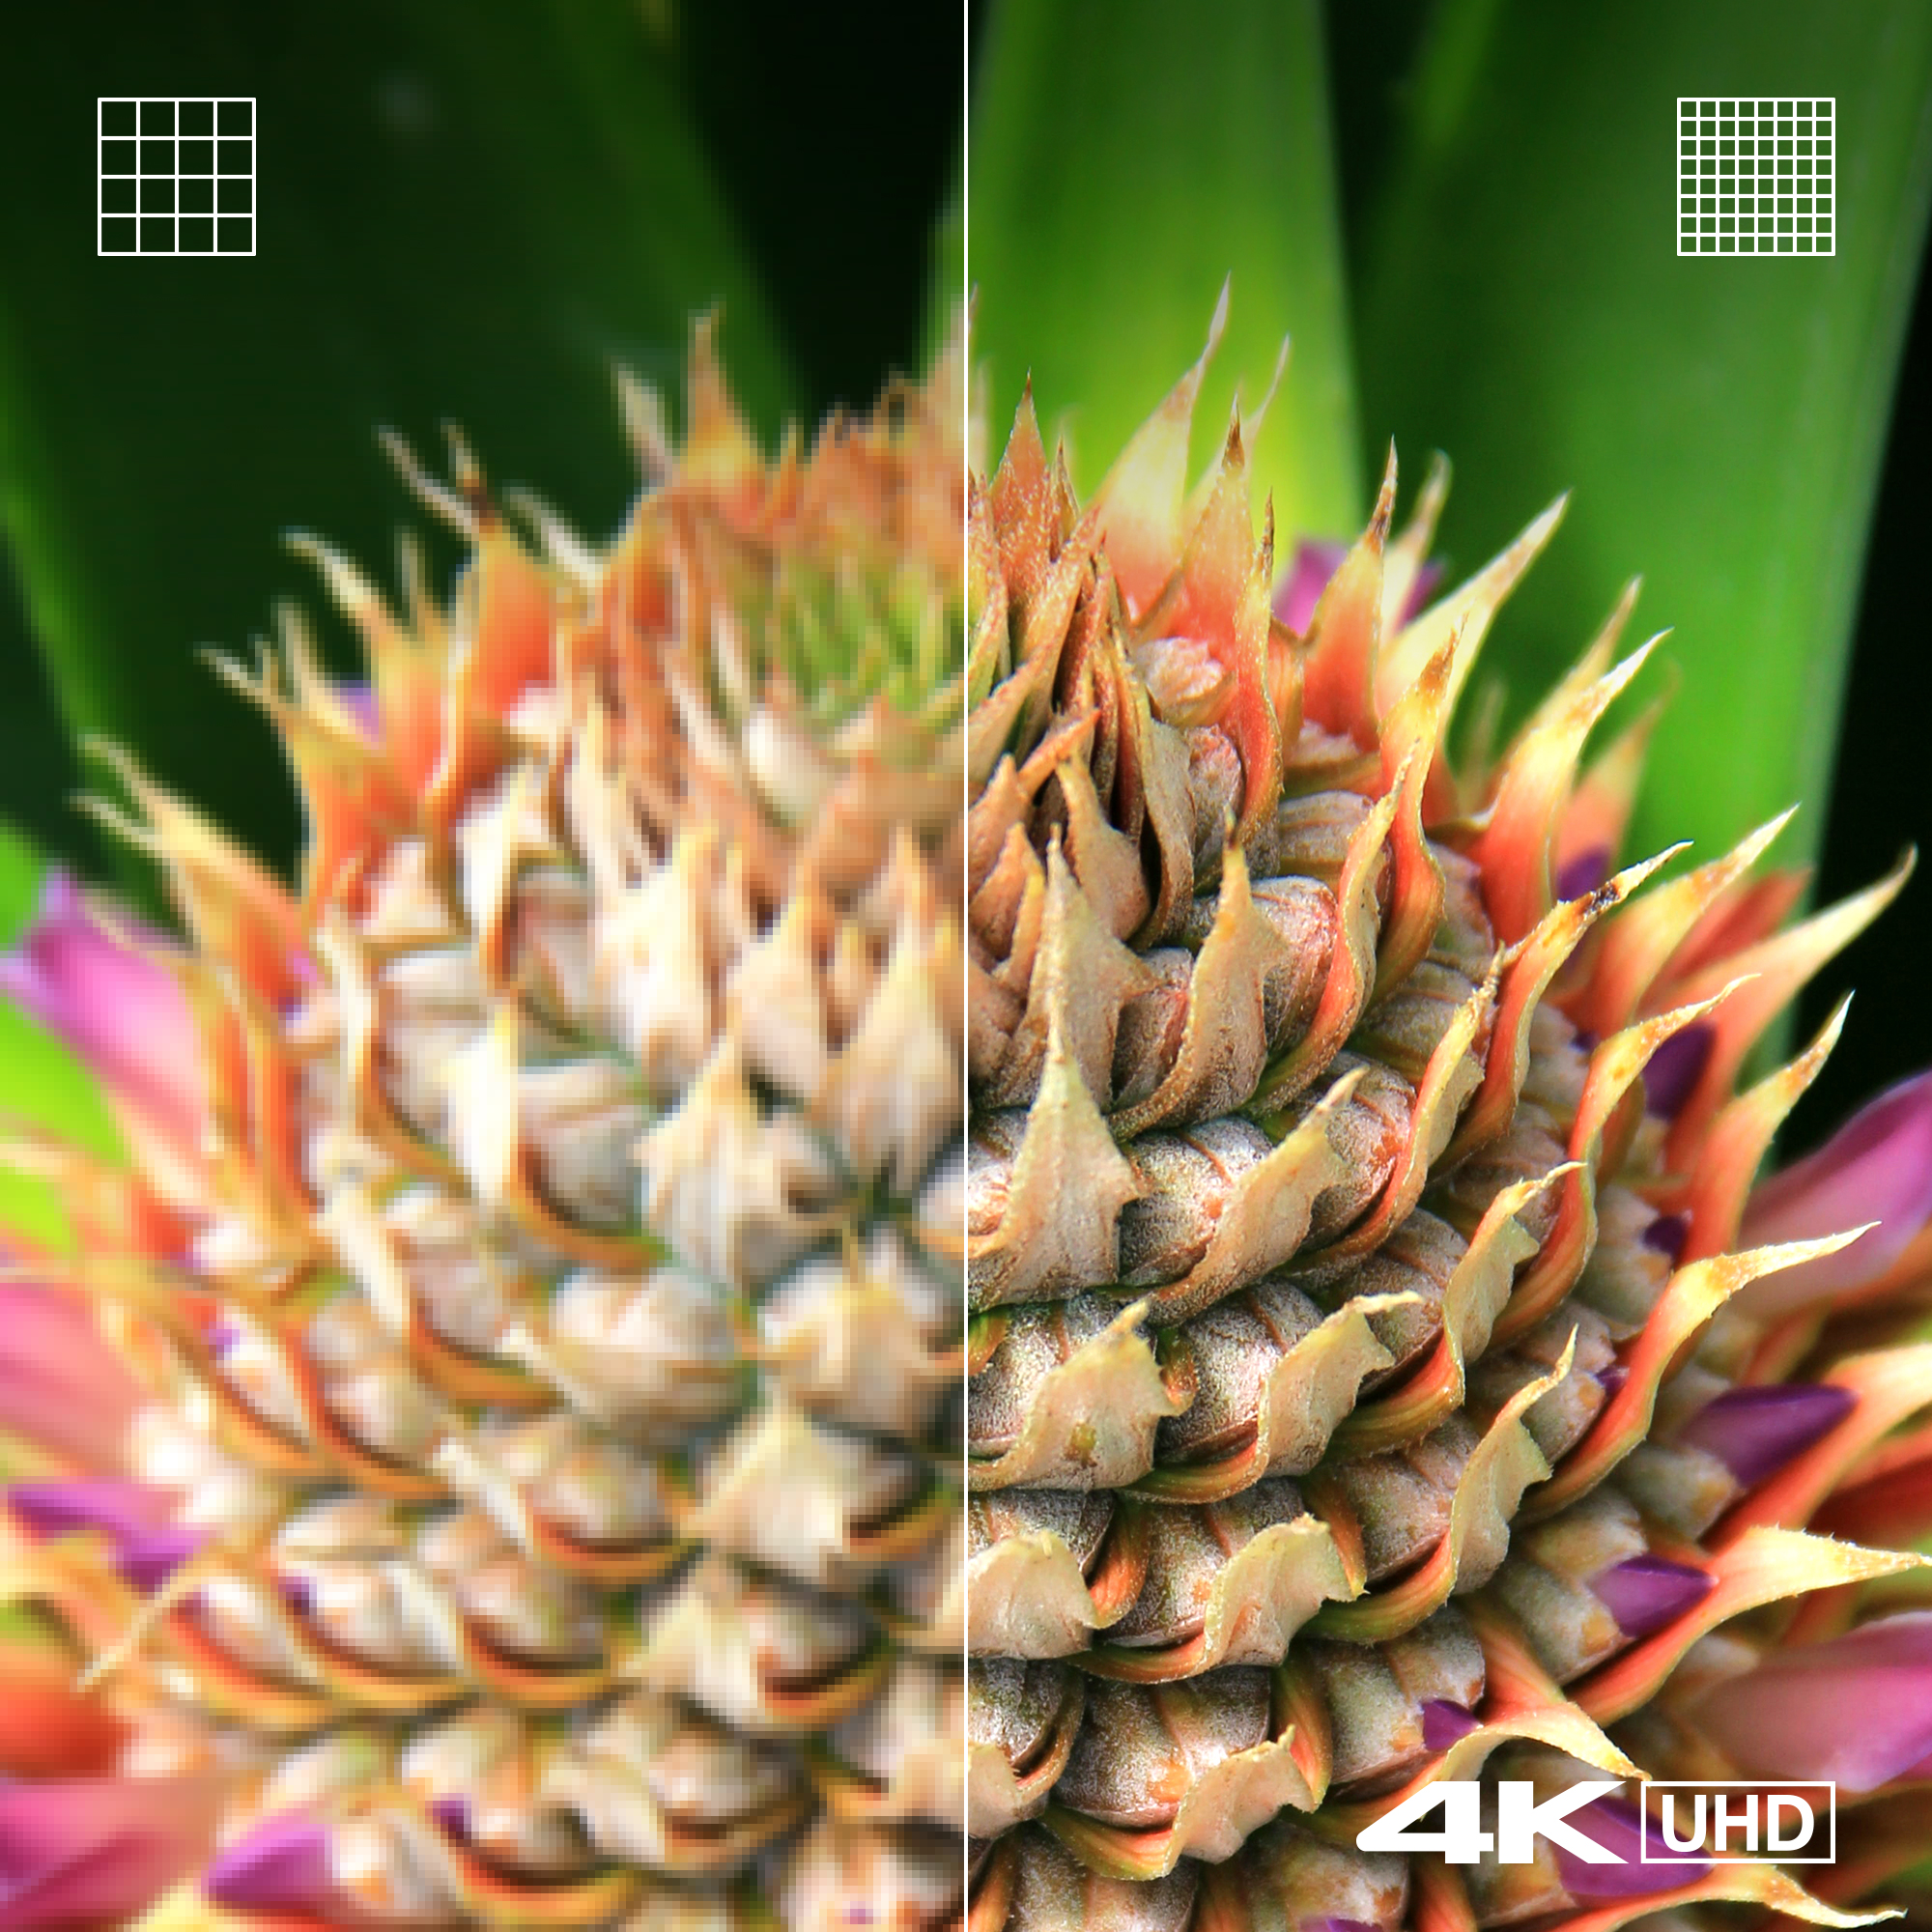 Nokia 65" 4K UHD QLED Smart TV on Android TV